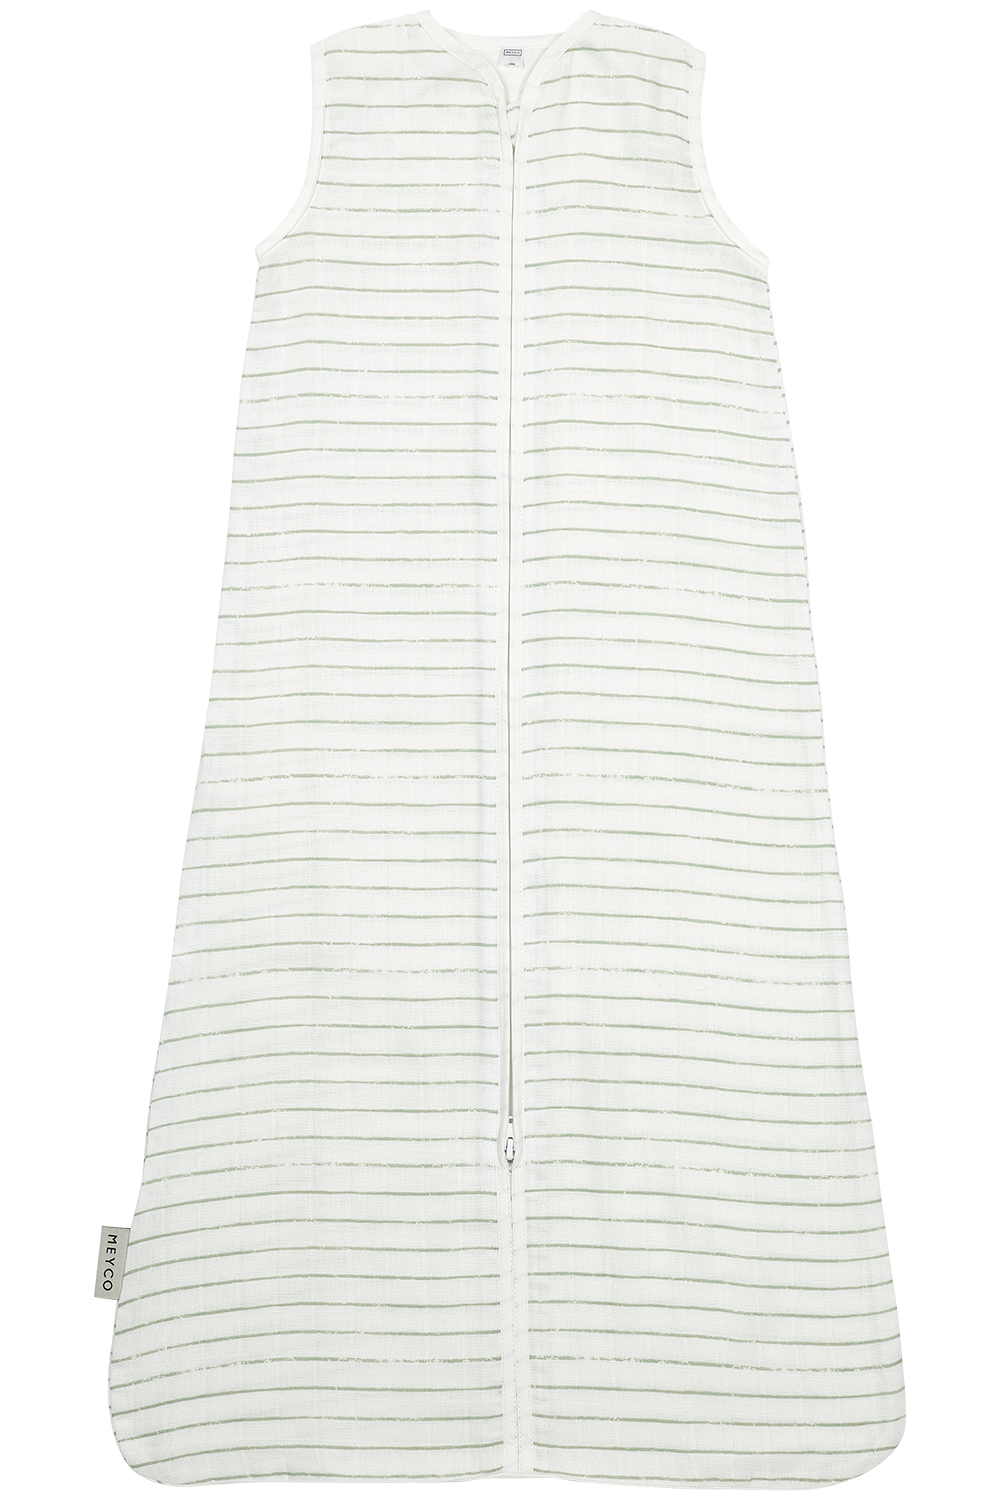 Sleepingbag muslin Stripe - soft green - 110cm